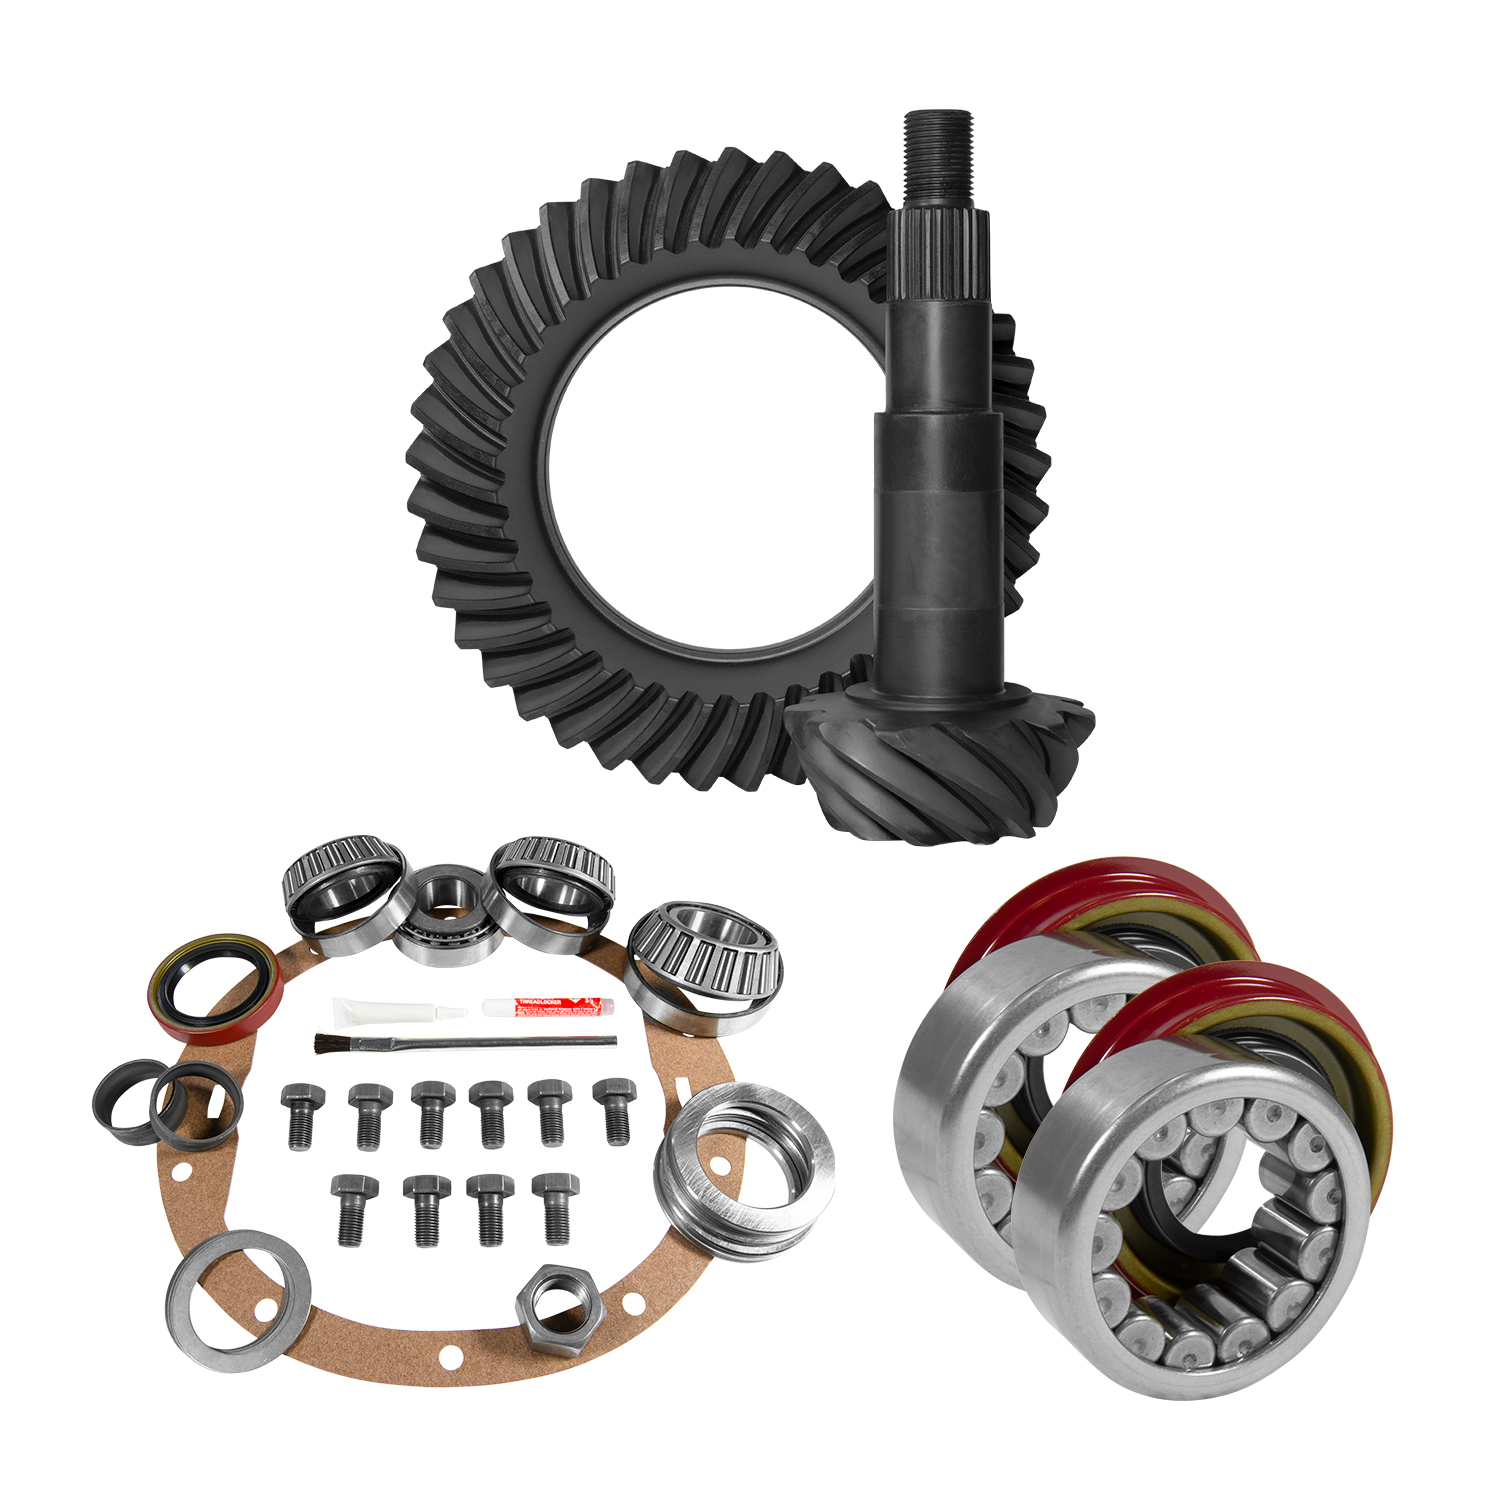 8.5" GM 3.73 Rear Ring & Pinion, Install Kit, Axle Bearings, 1.625" Case Journal